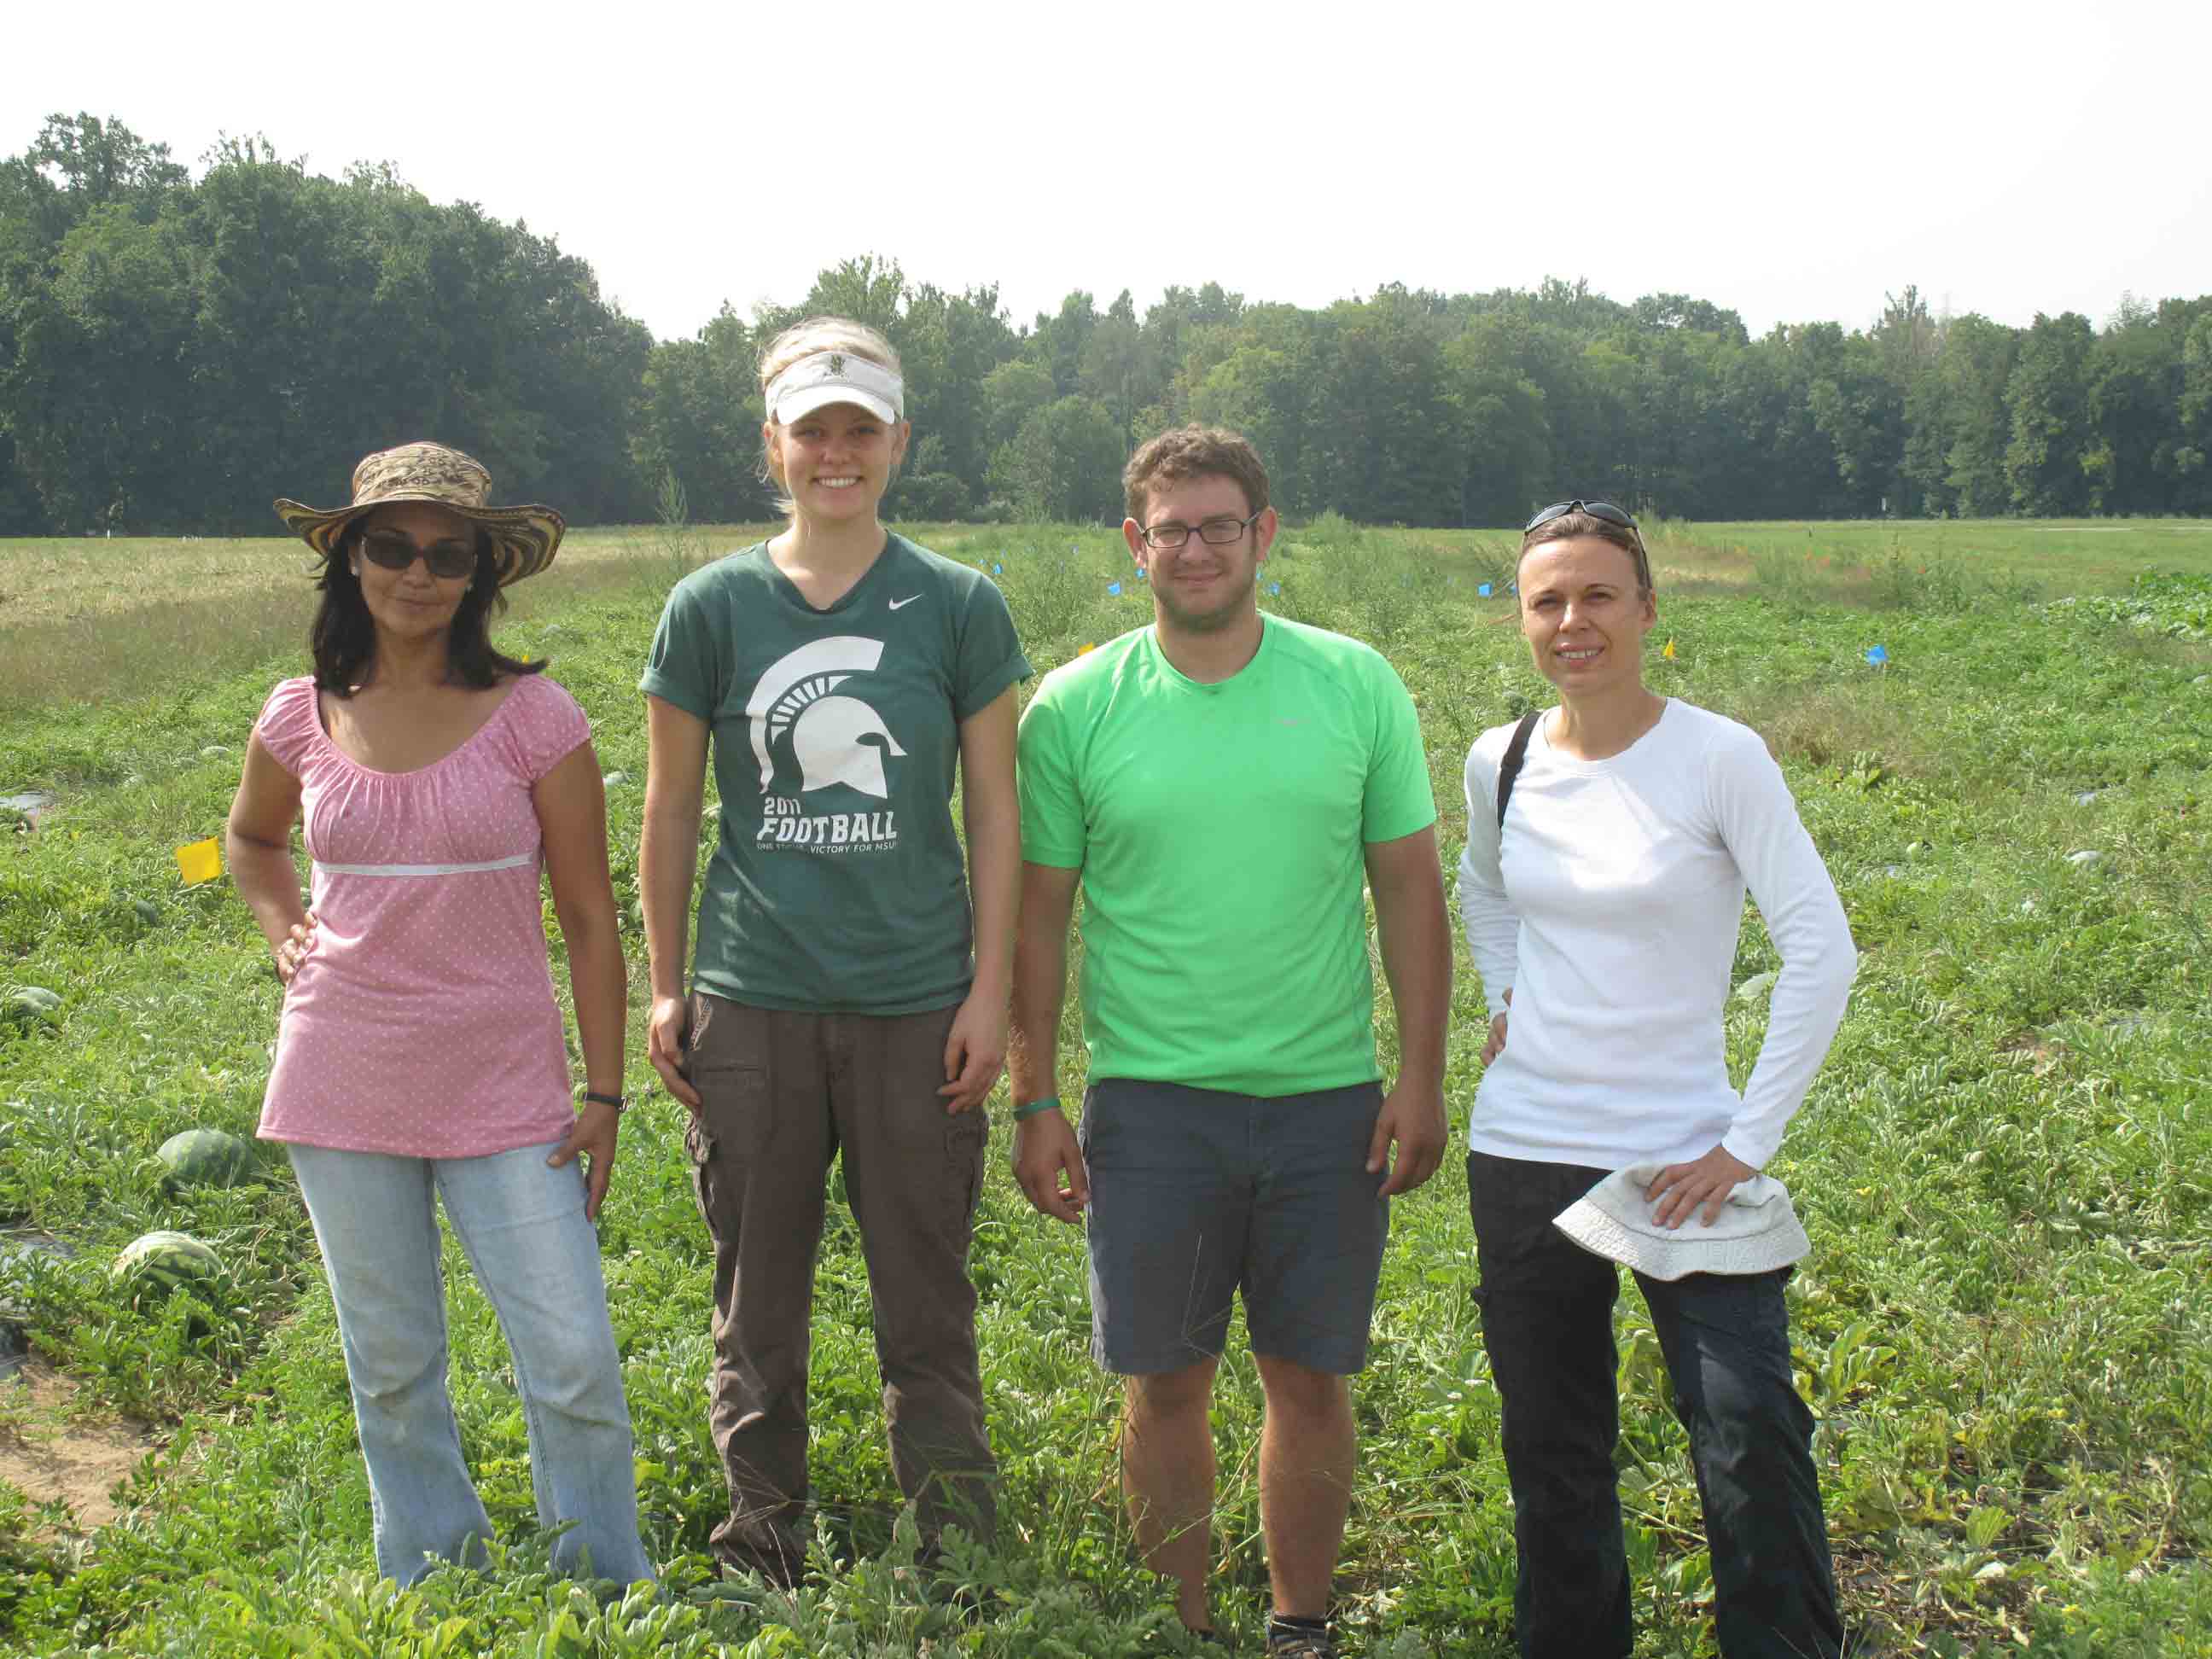 Watermelon sampling team, Aug. 2013. From left to right: Monica Hufnagel, Katie Demeuse, Adam Cortright, Zsofia Szendrei